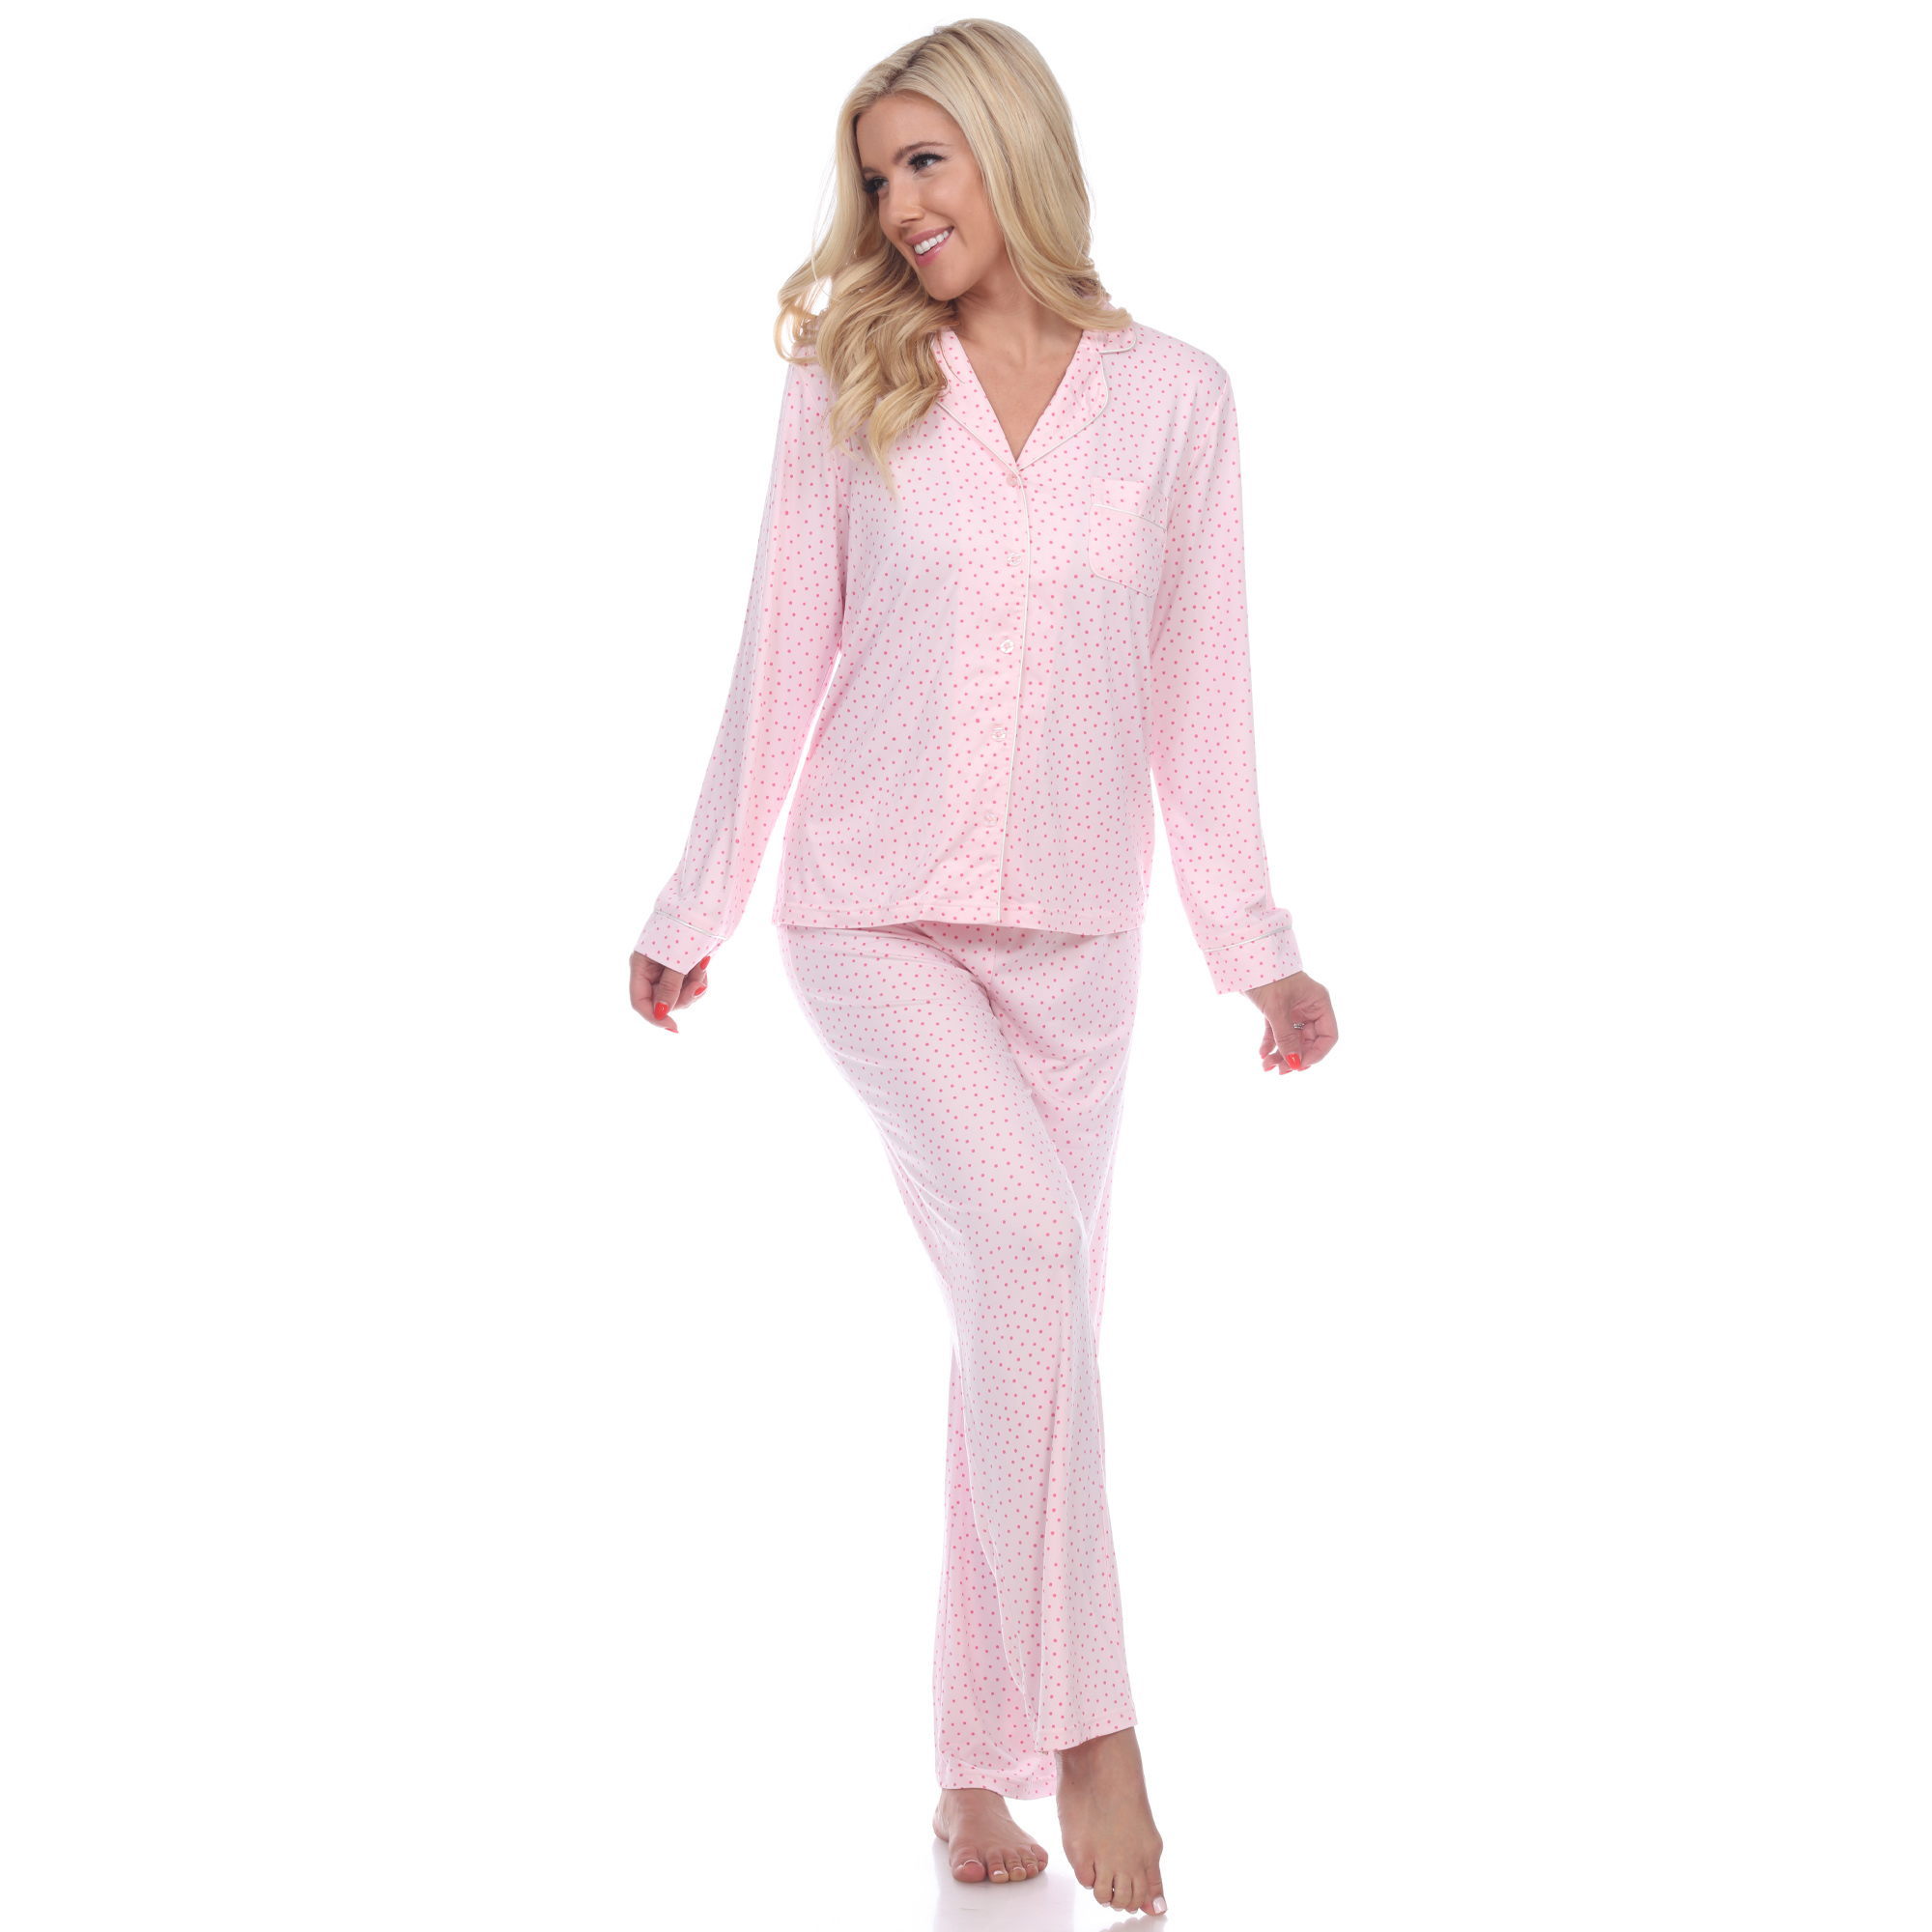 White Mark Women's Long Sleeve Dots Pajama Set - Pink, 1X